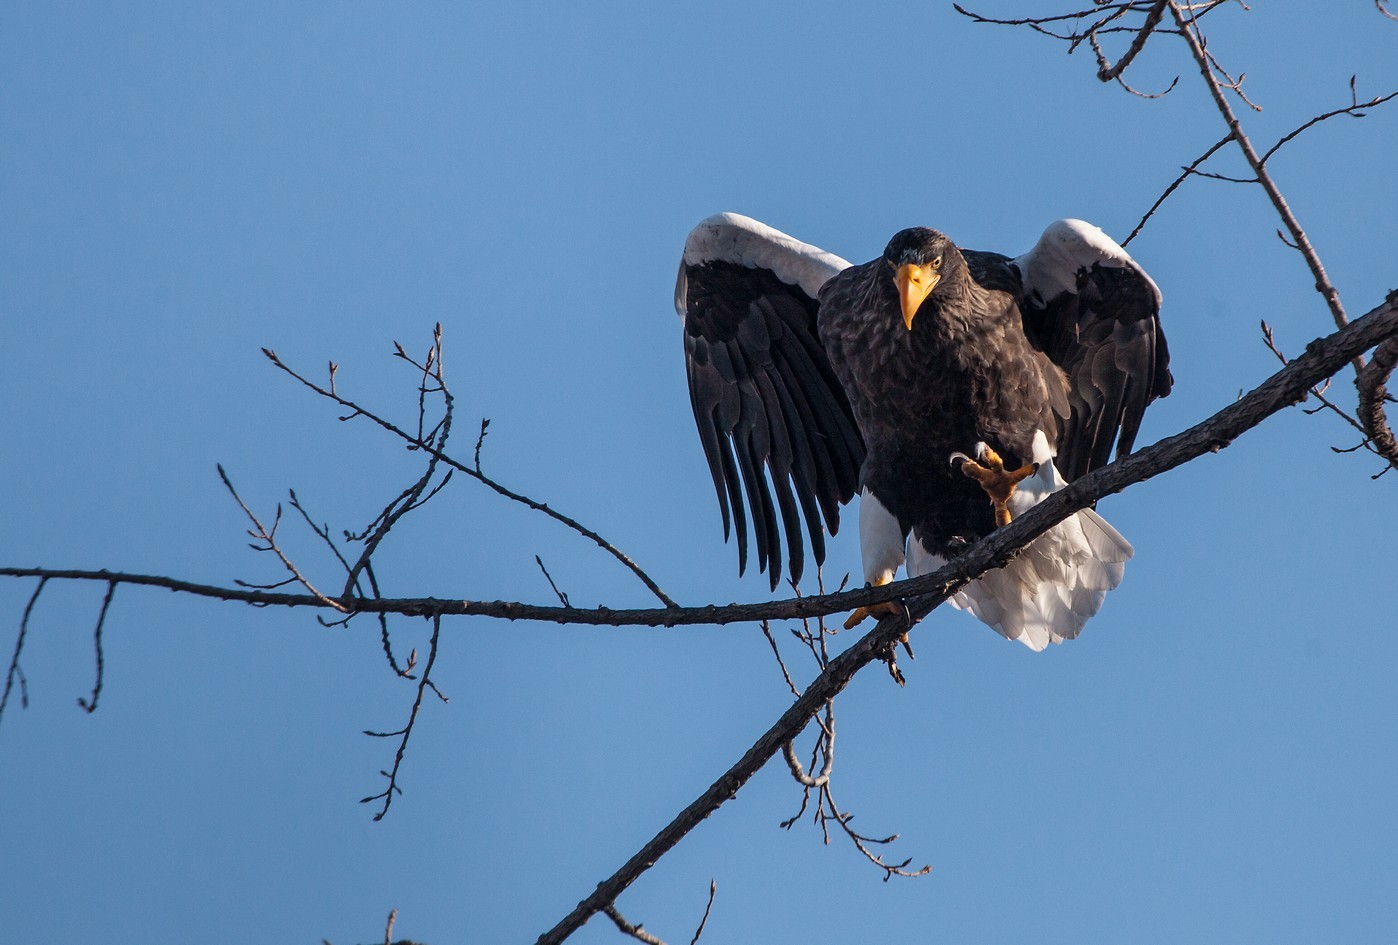 Steller's sea eagle on a tree branch